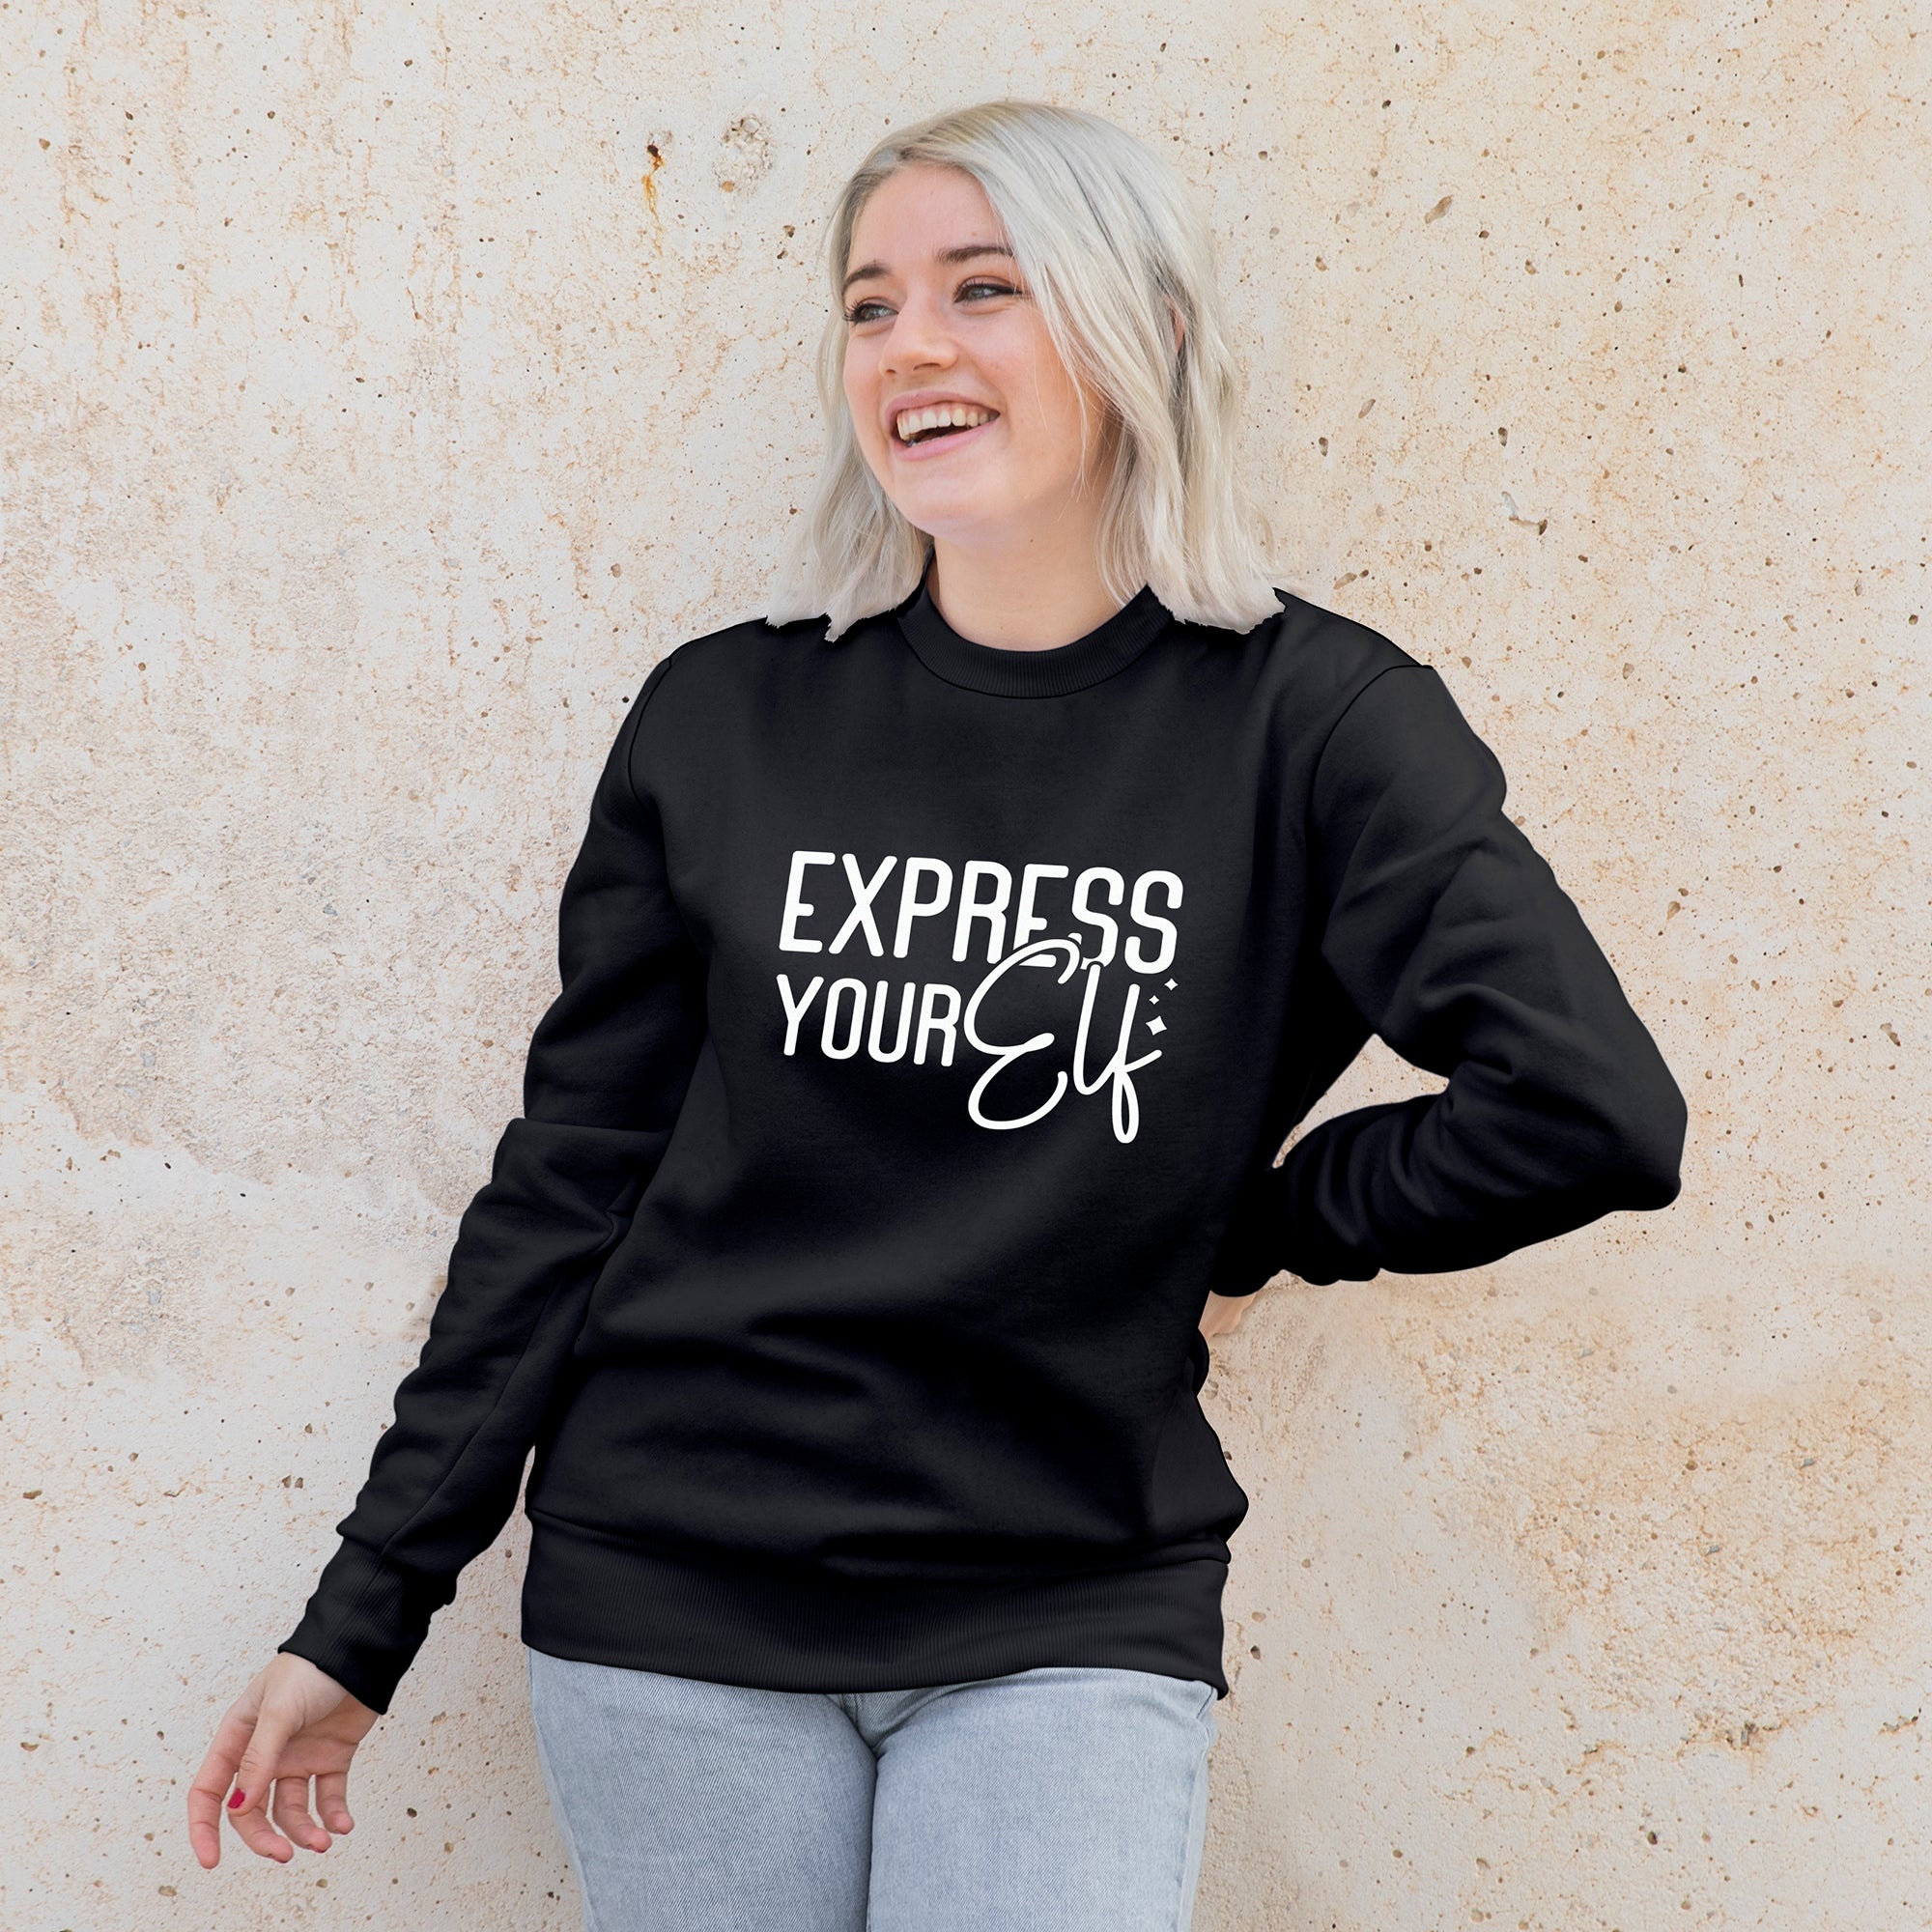 'Express Your Elf' Sweatshirts